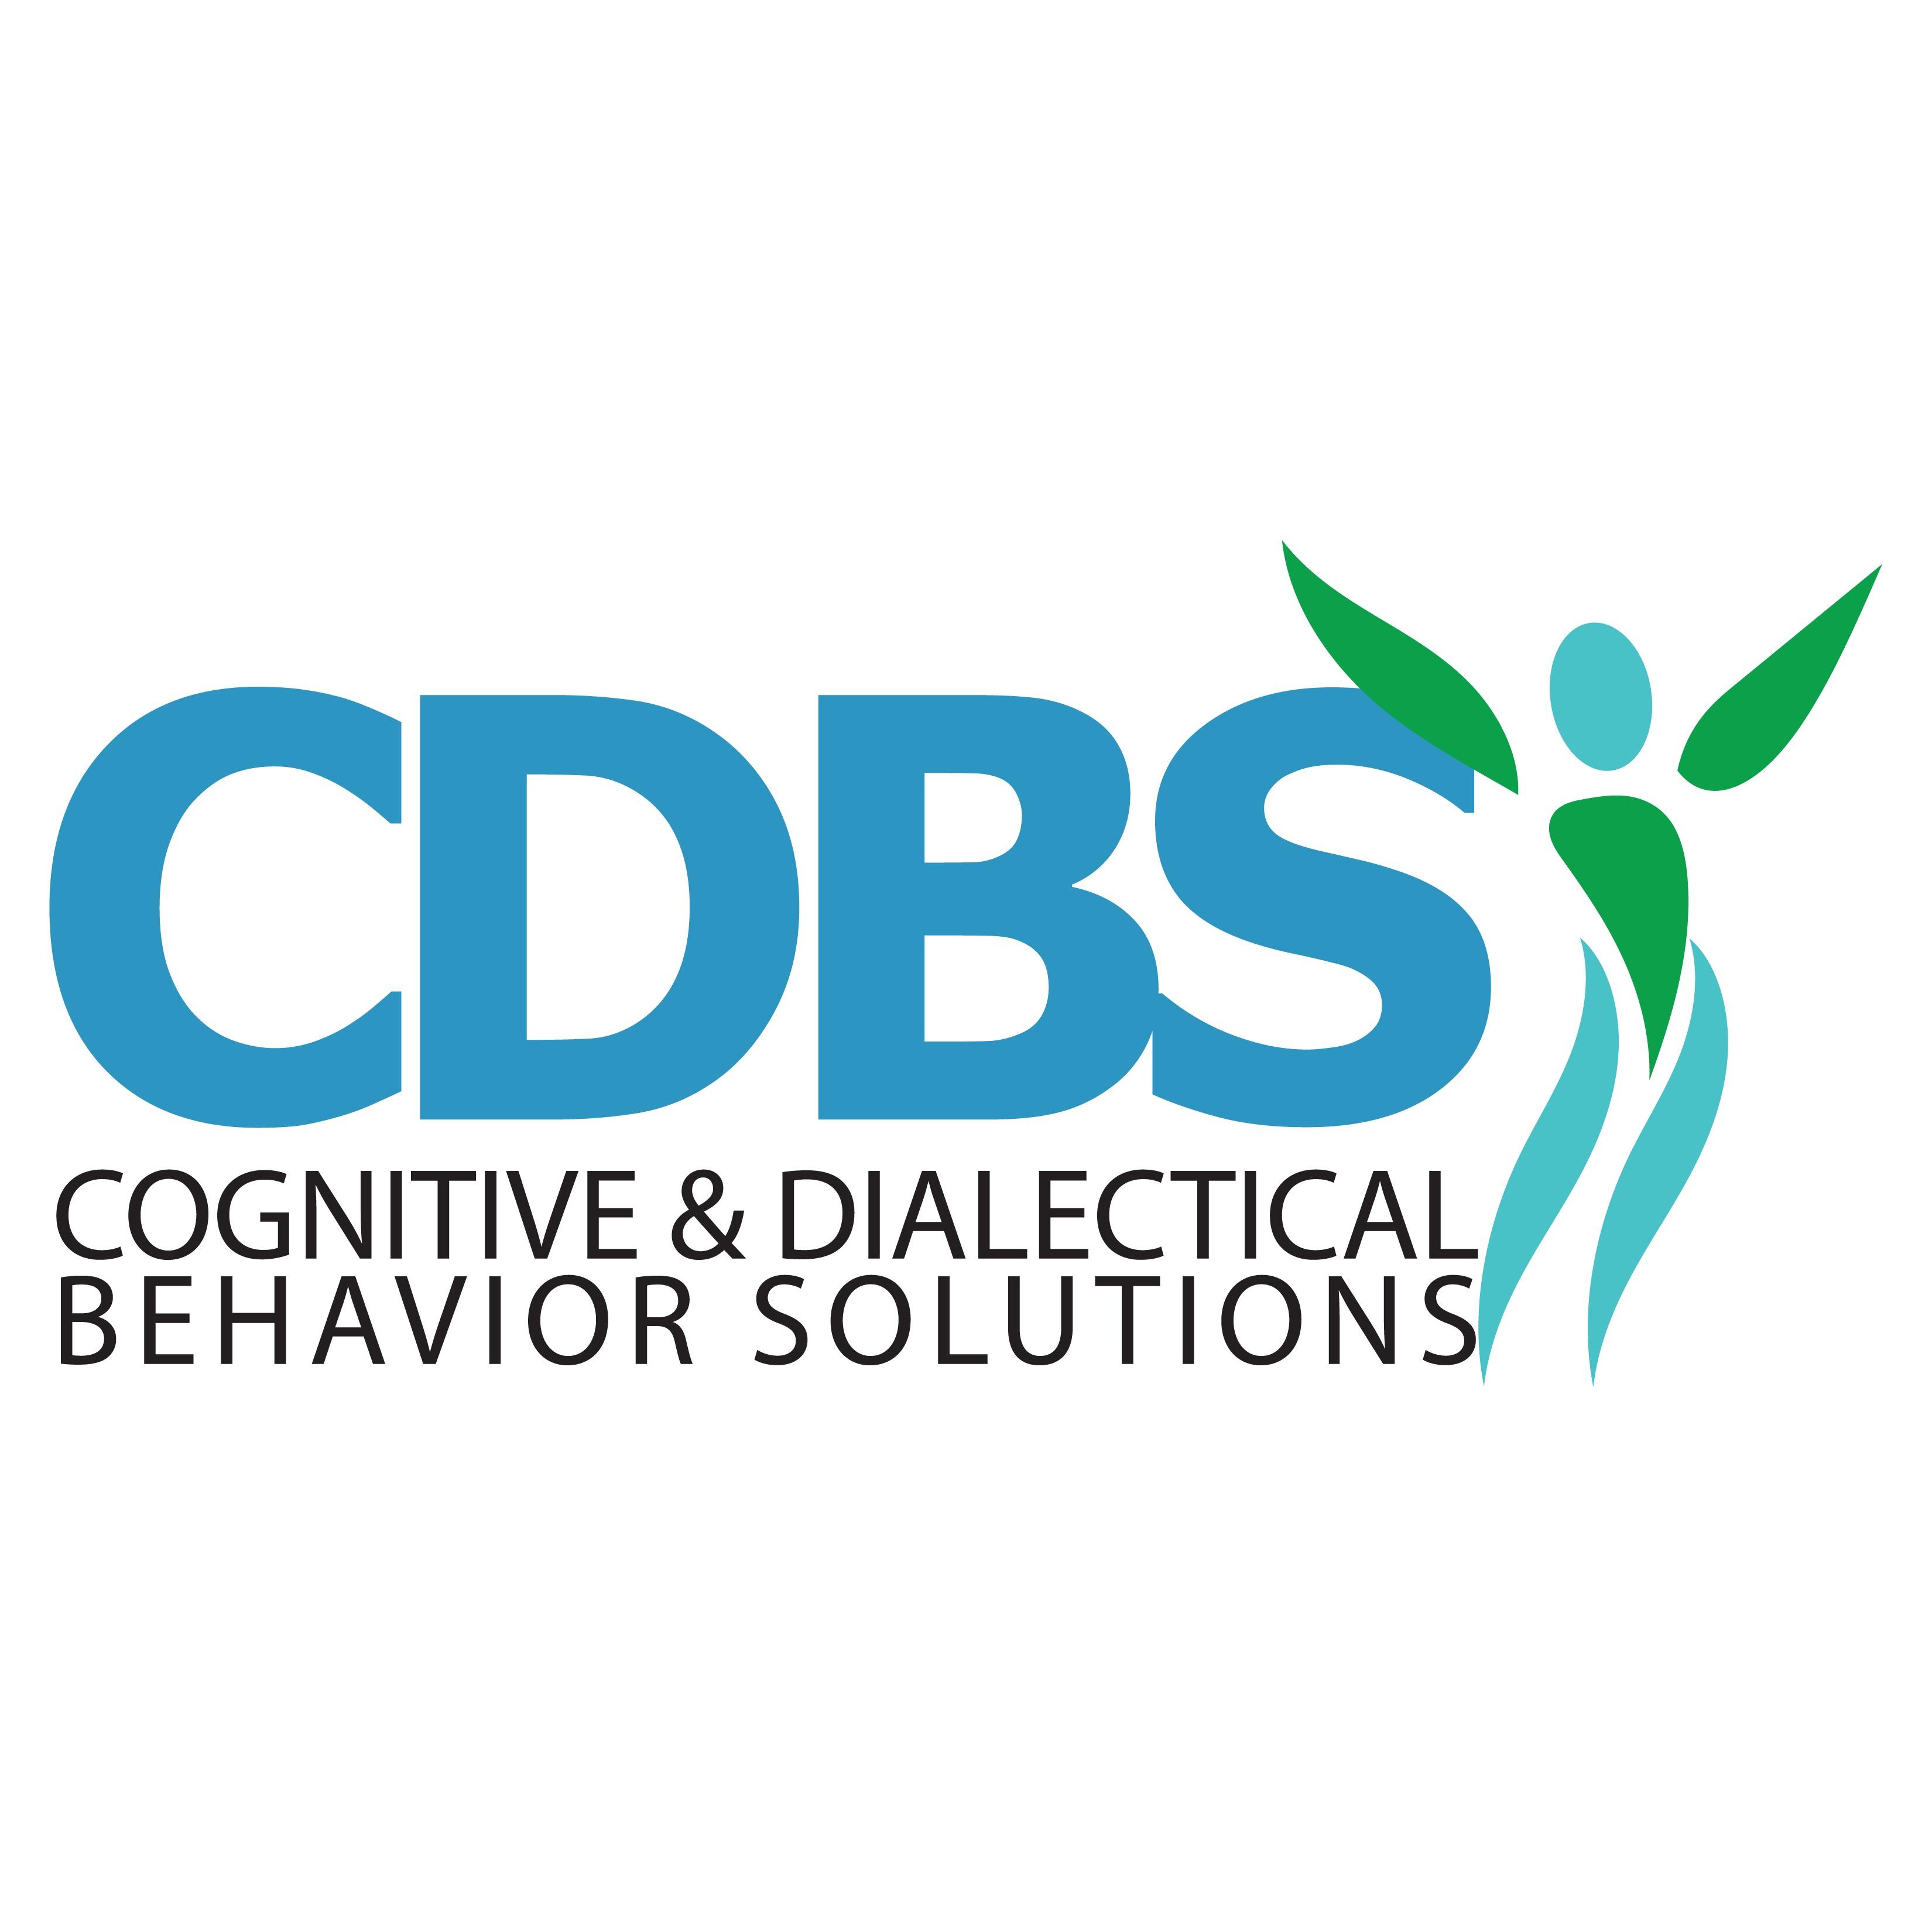 Cognitive & Dialectical Behavior Solutions Logo